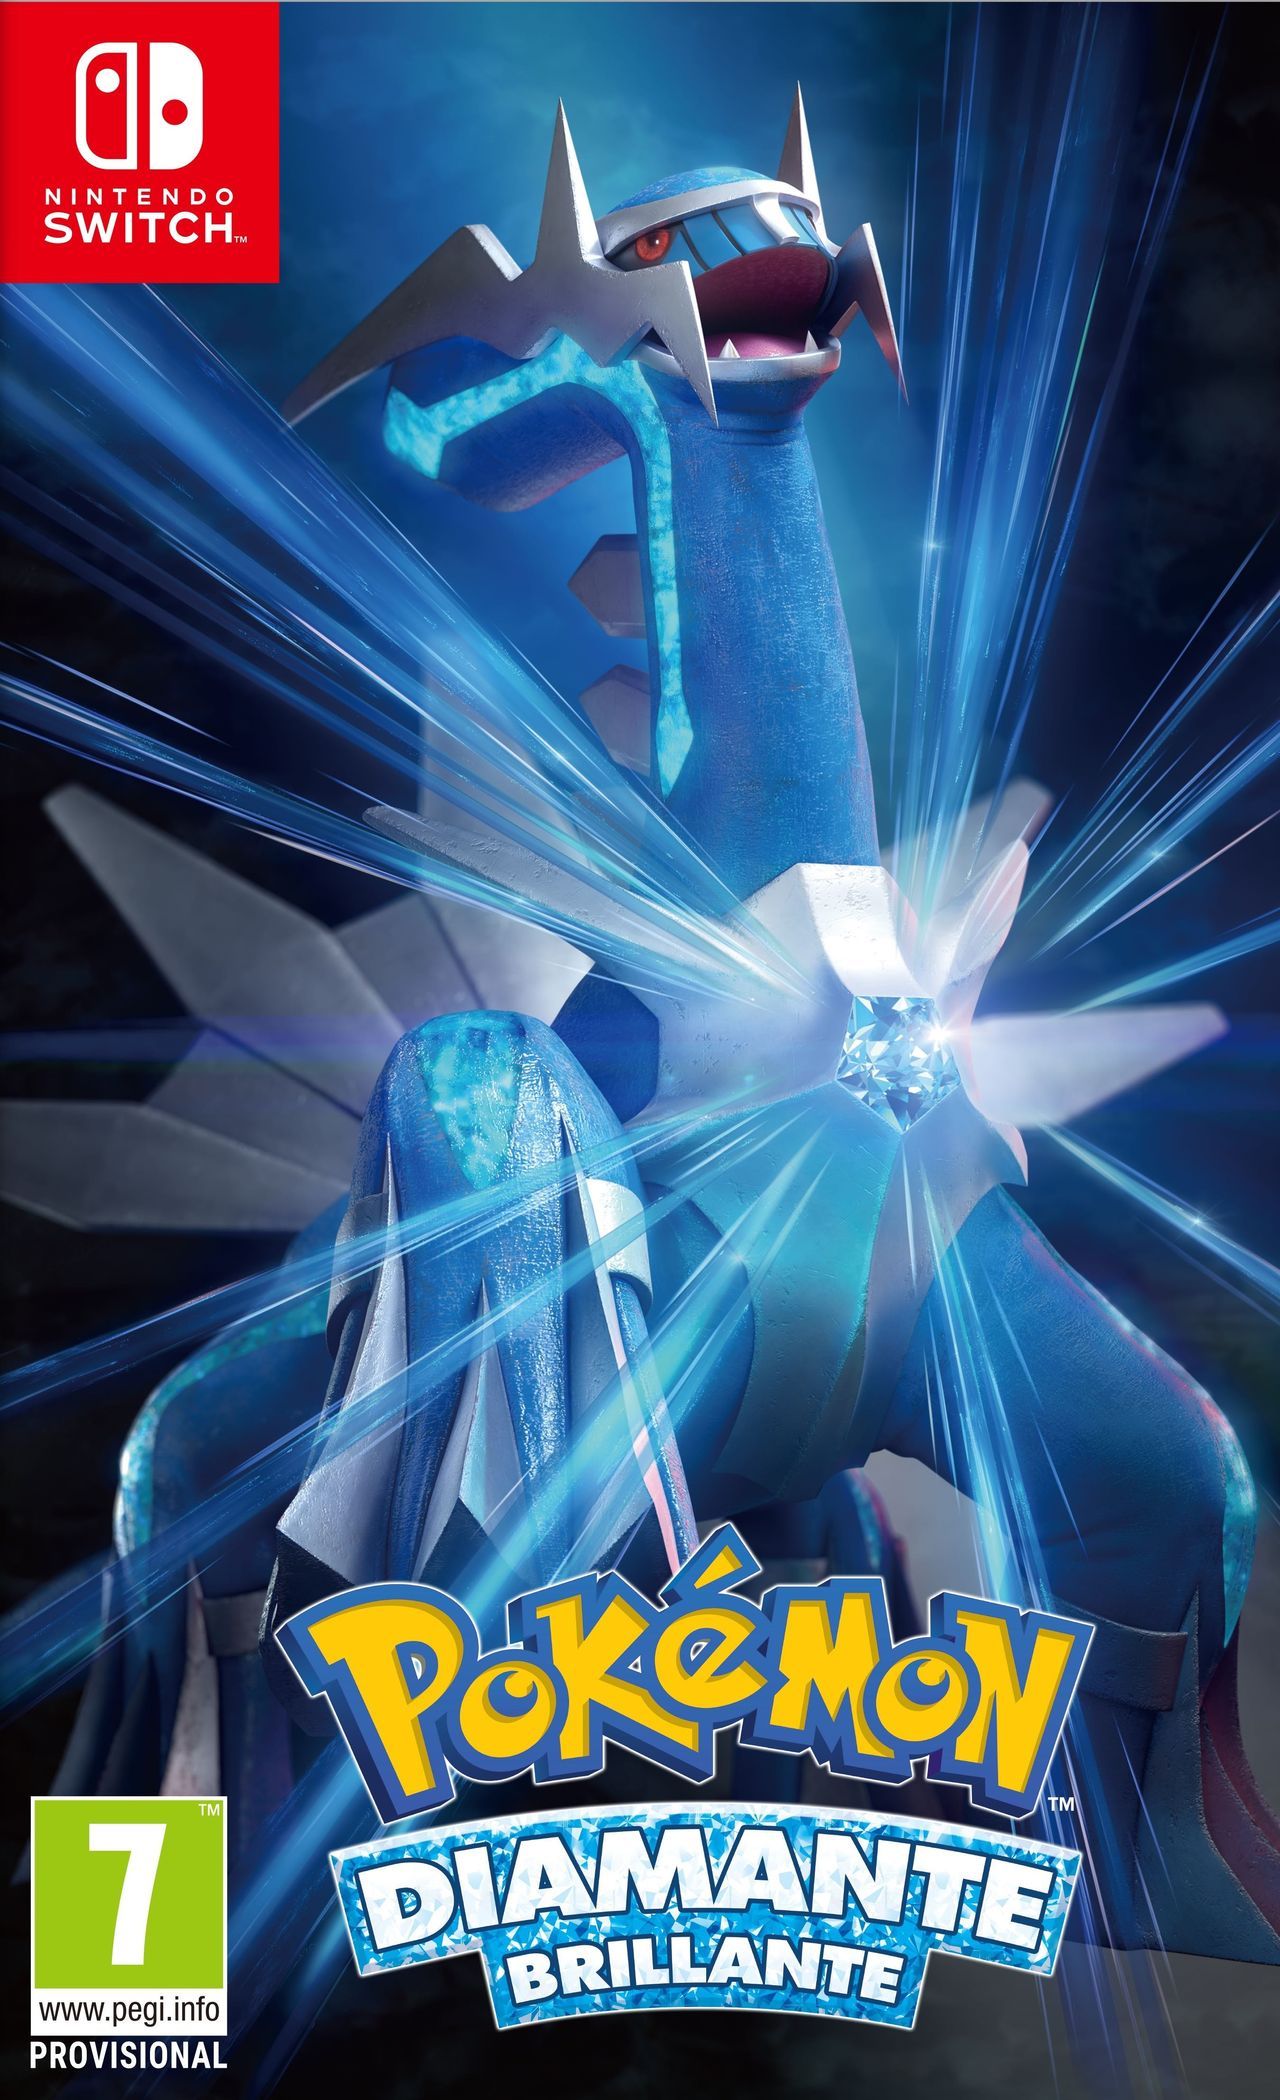 Nintenderos on X: Vuelve a Sinnoh con Pokémon Diamante Brillante